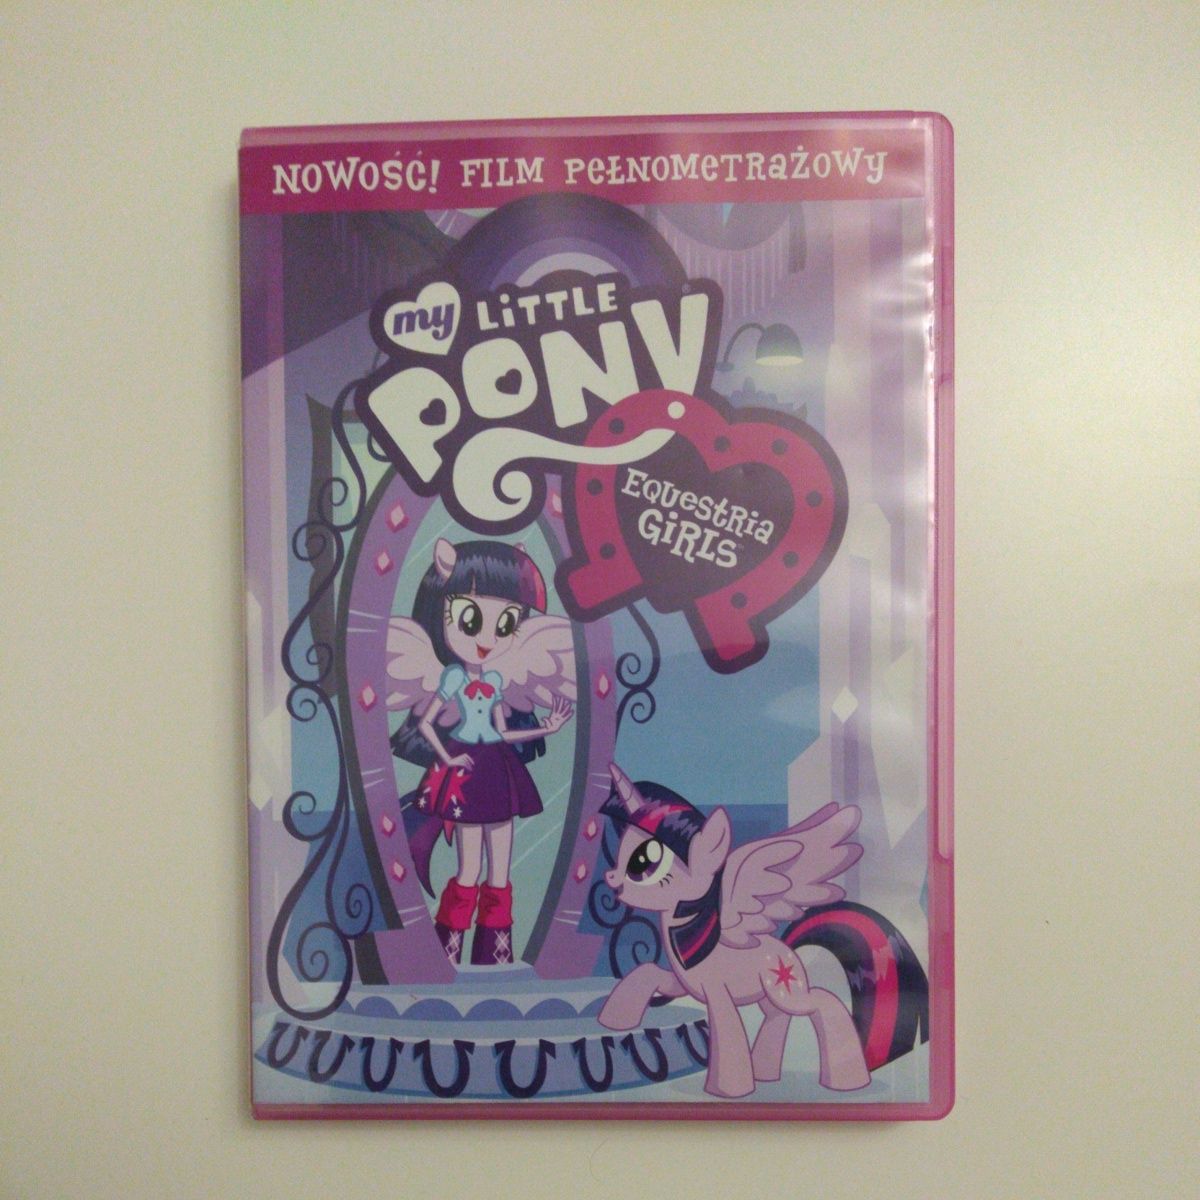 Equestria Girls film DVD